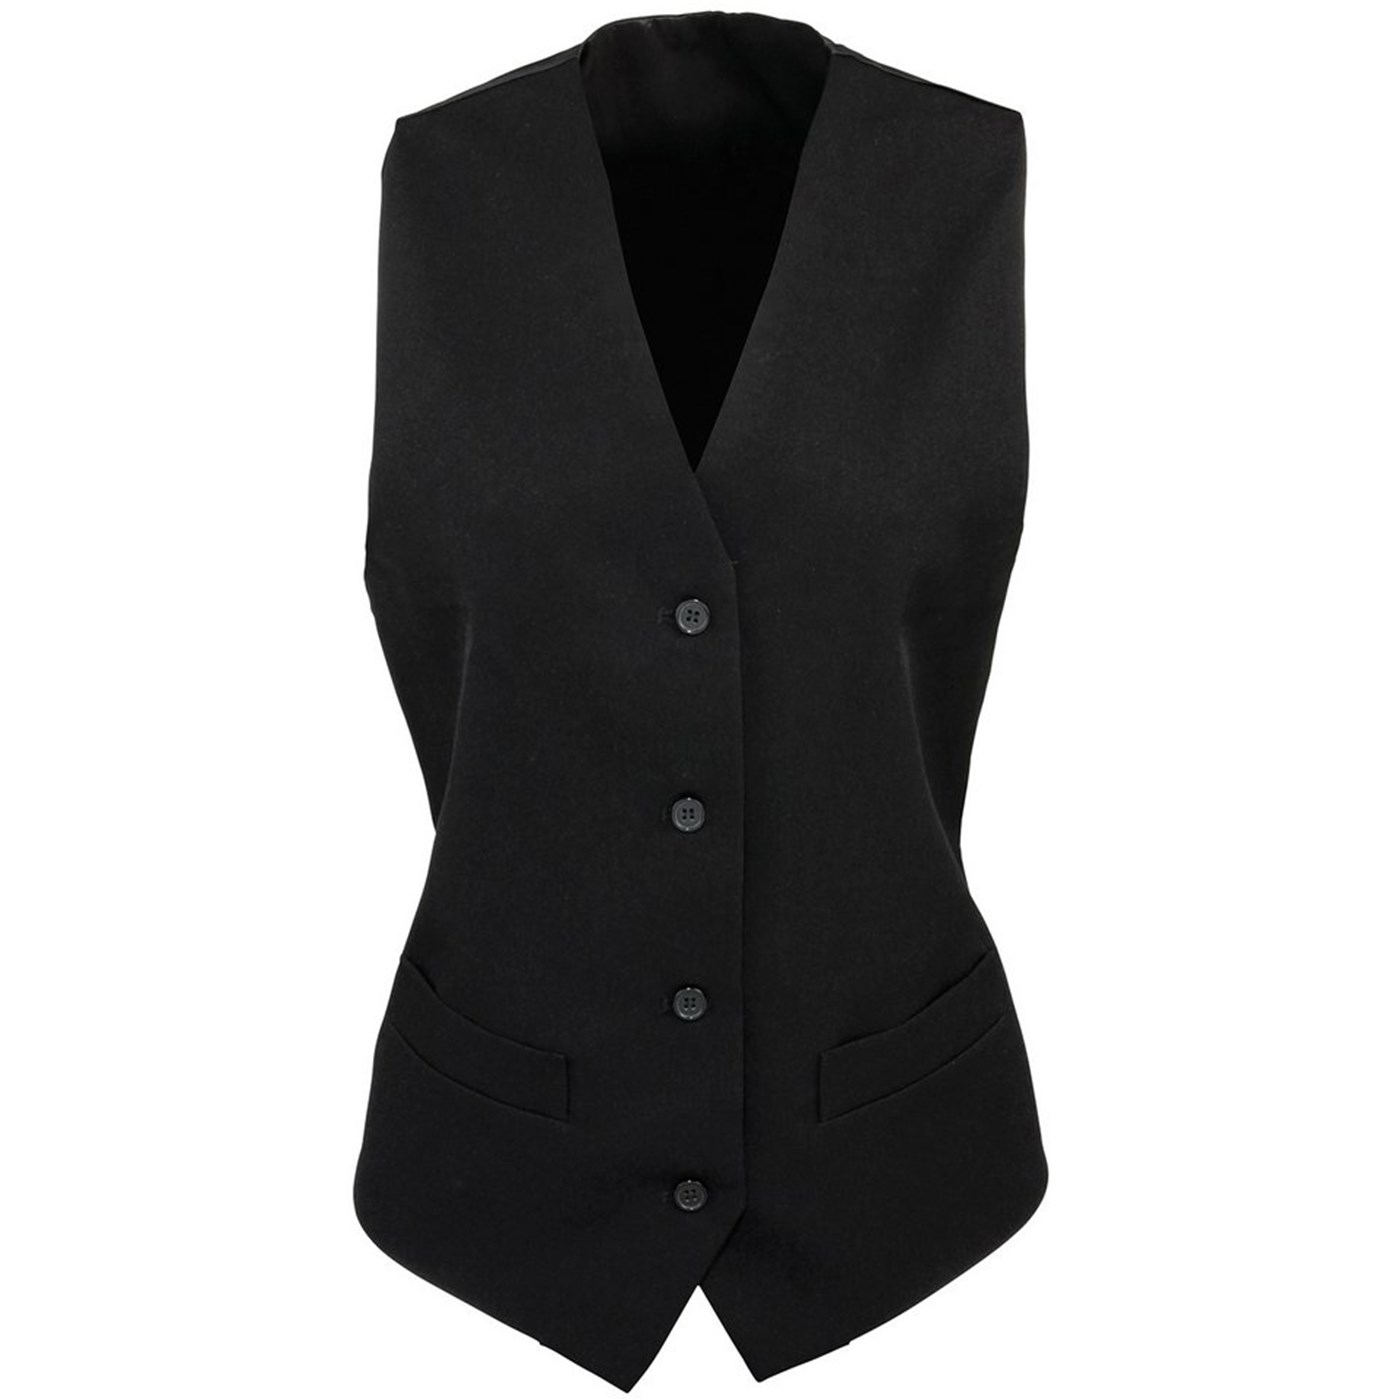 Premier Women's 4 Button Lined Polyester Waistcoat PR623